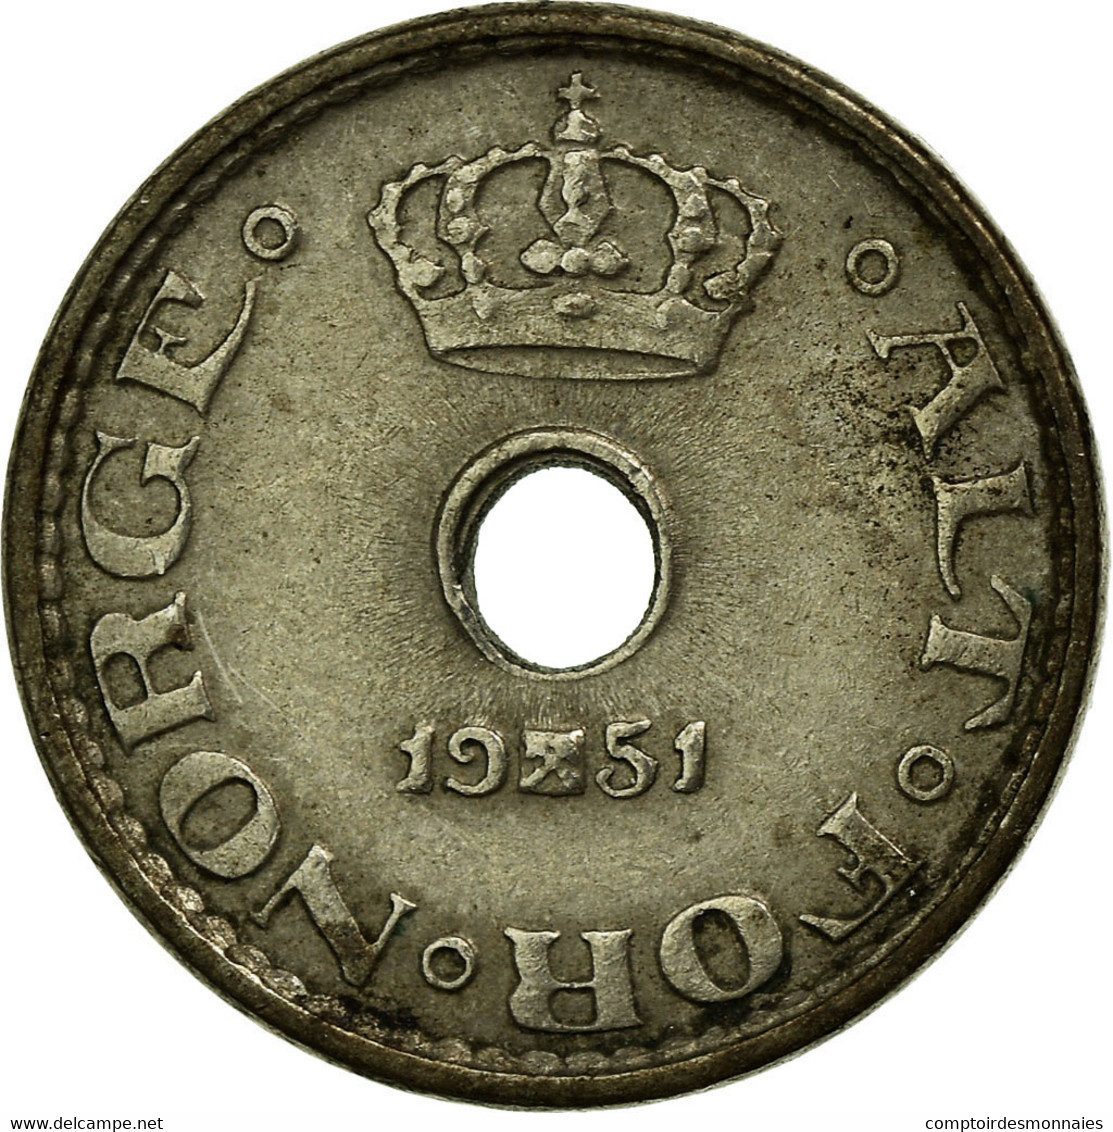 Monnaie, Norvège, Haakon VII, 10 Öre, 1951, TTB, Copper-nickel, KM:383 - Norway